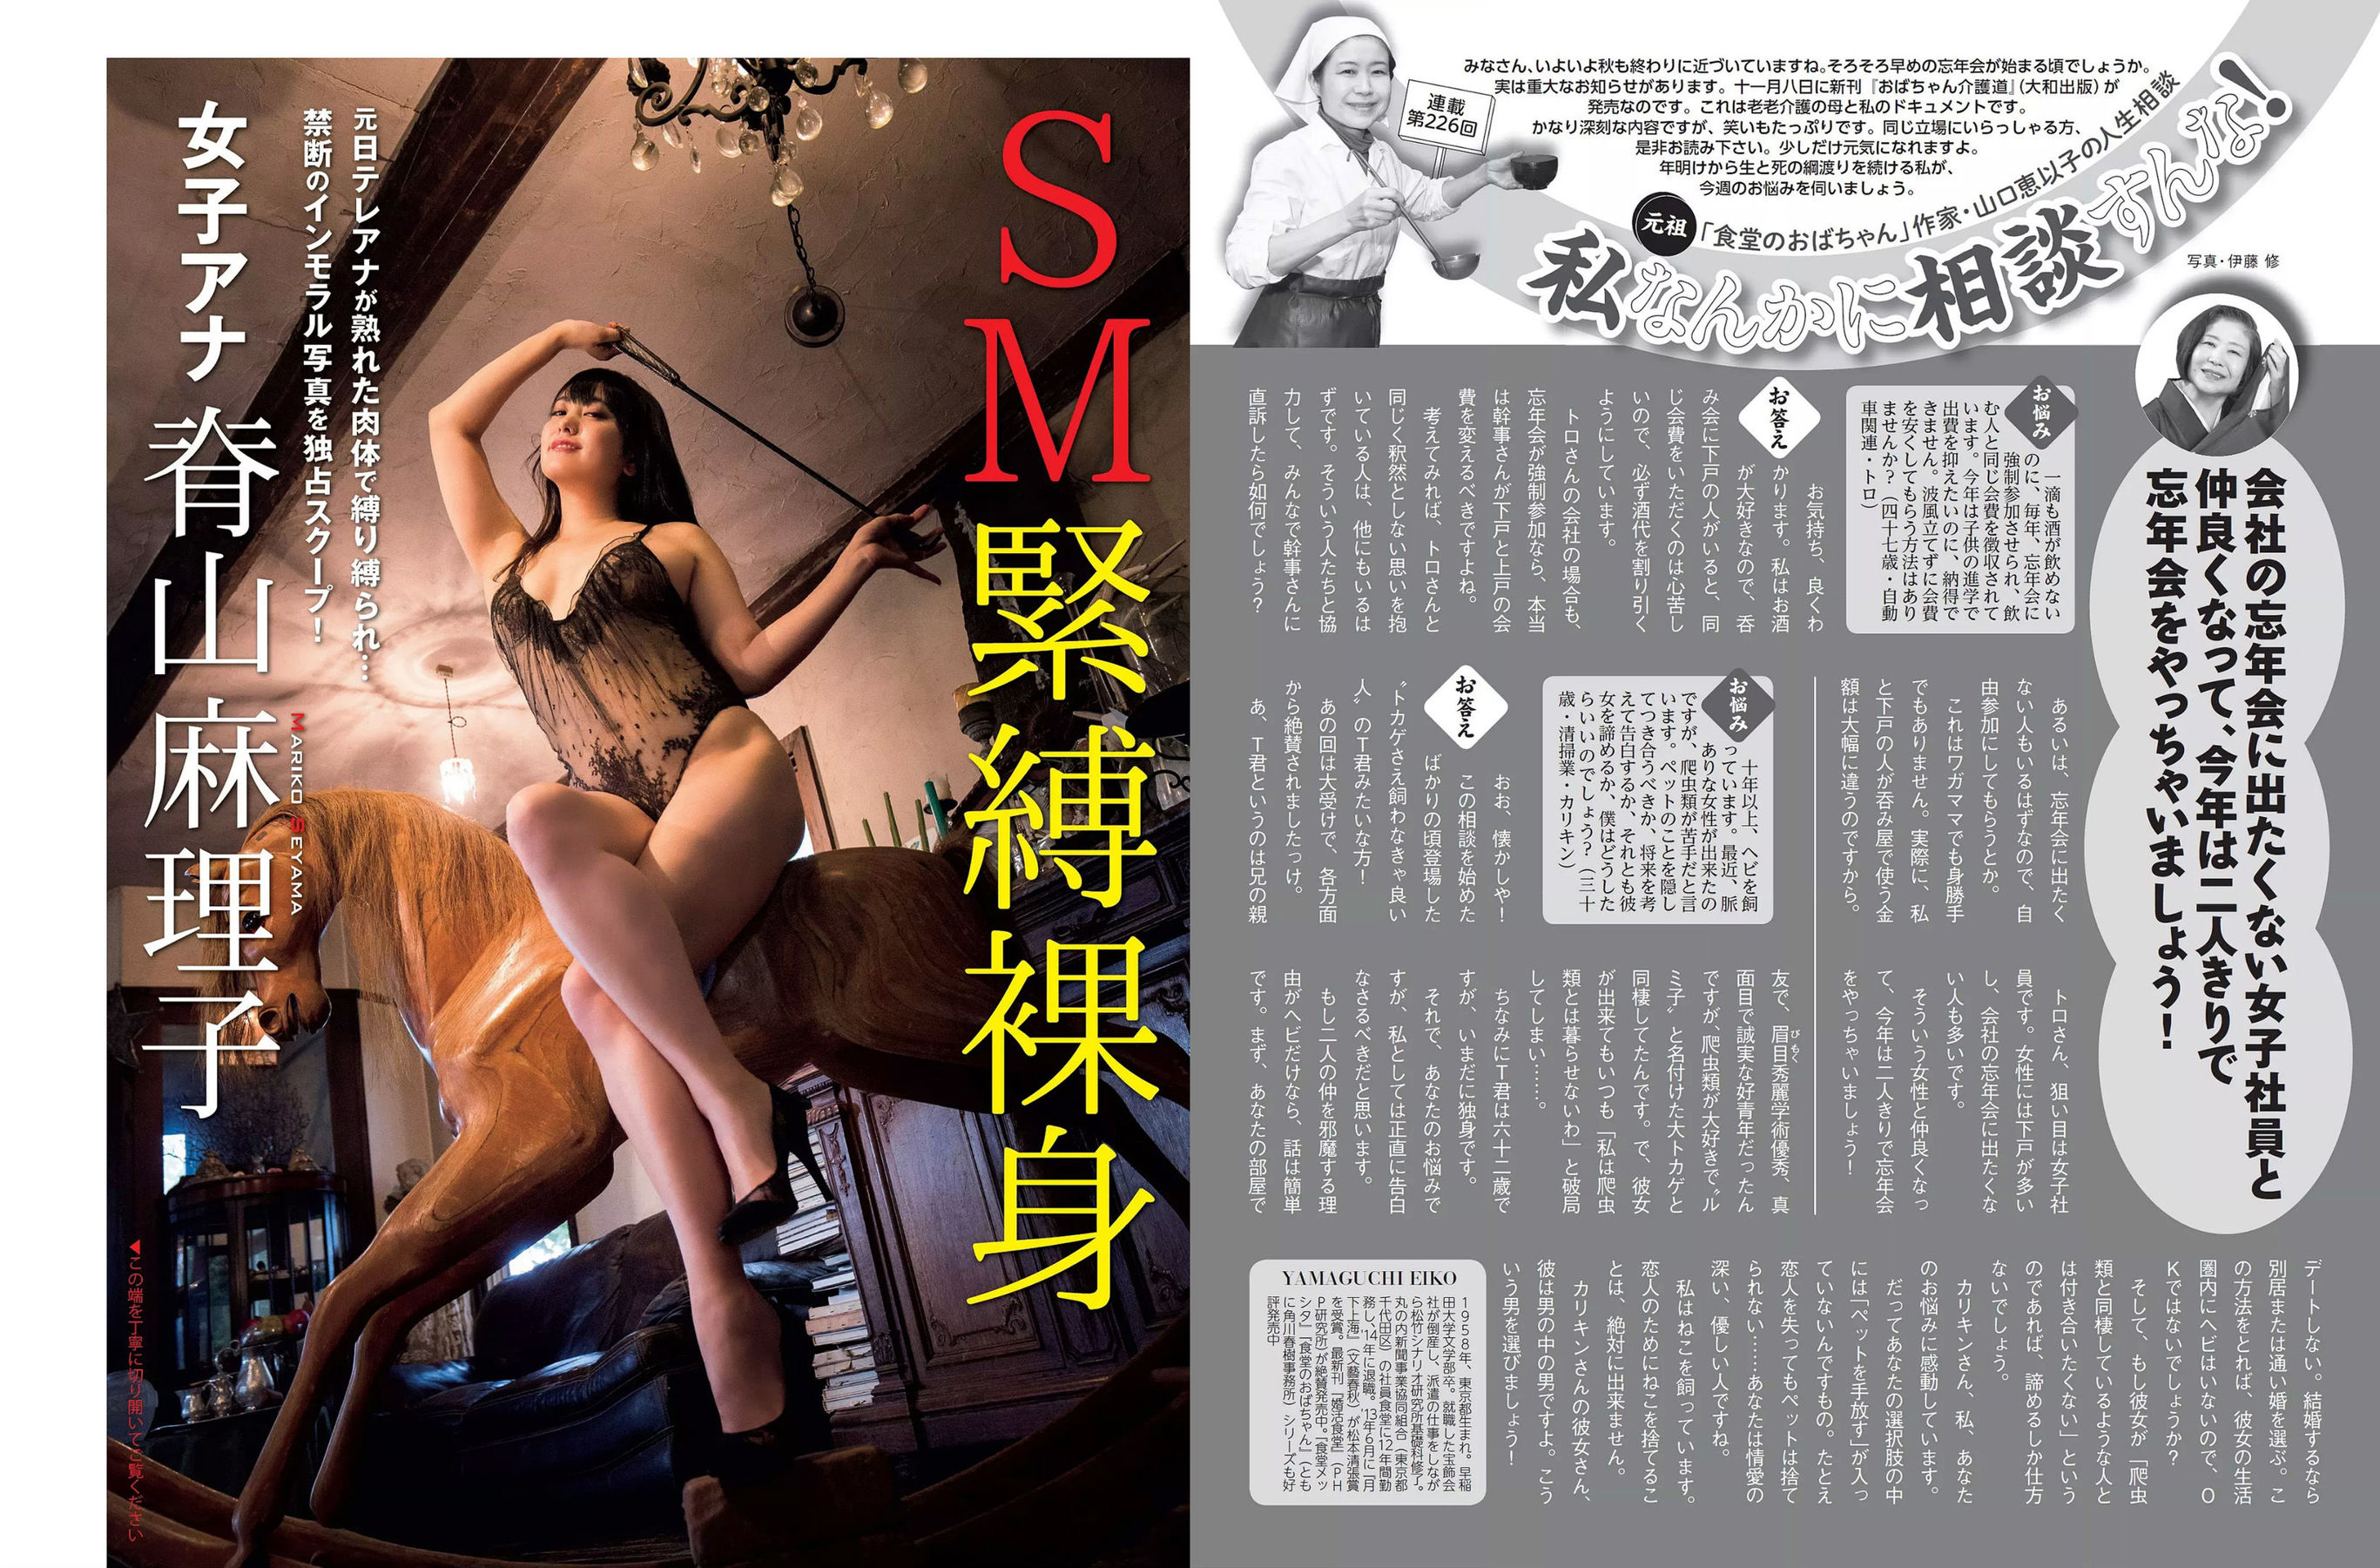 [FLASH]杂志:福岛雪菜高品质写真大图收藏合集(17P)